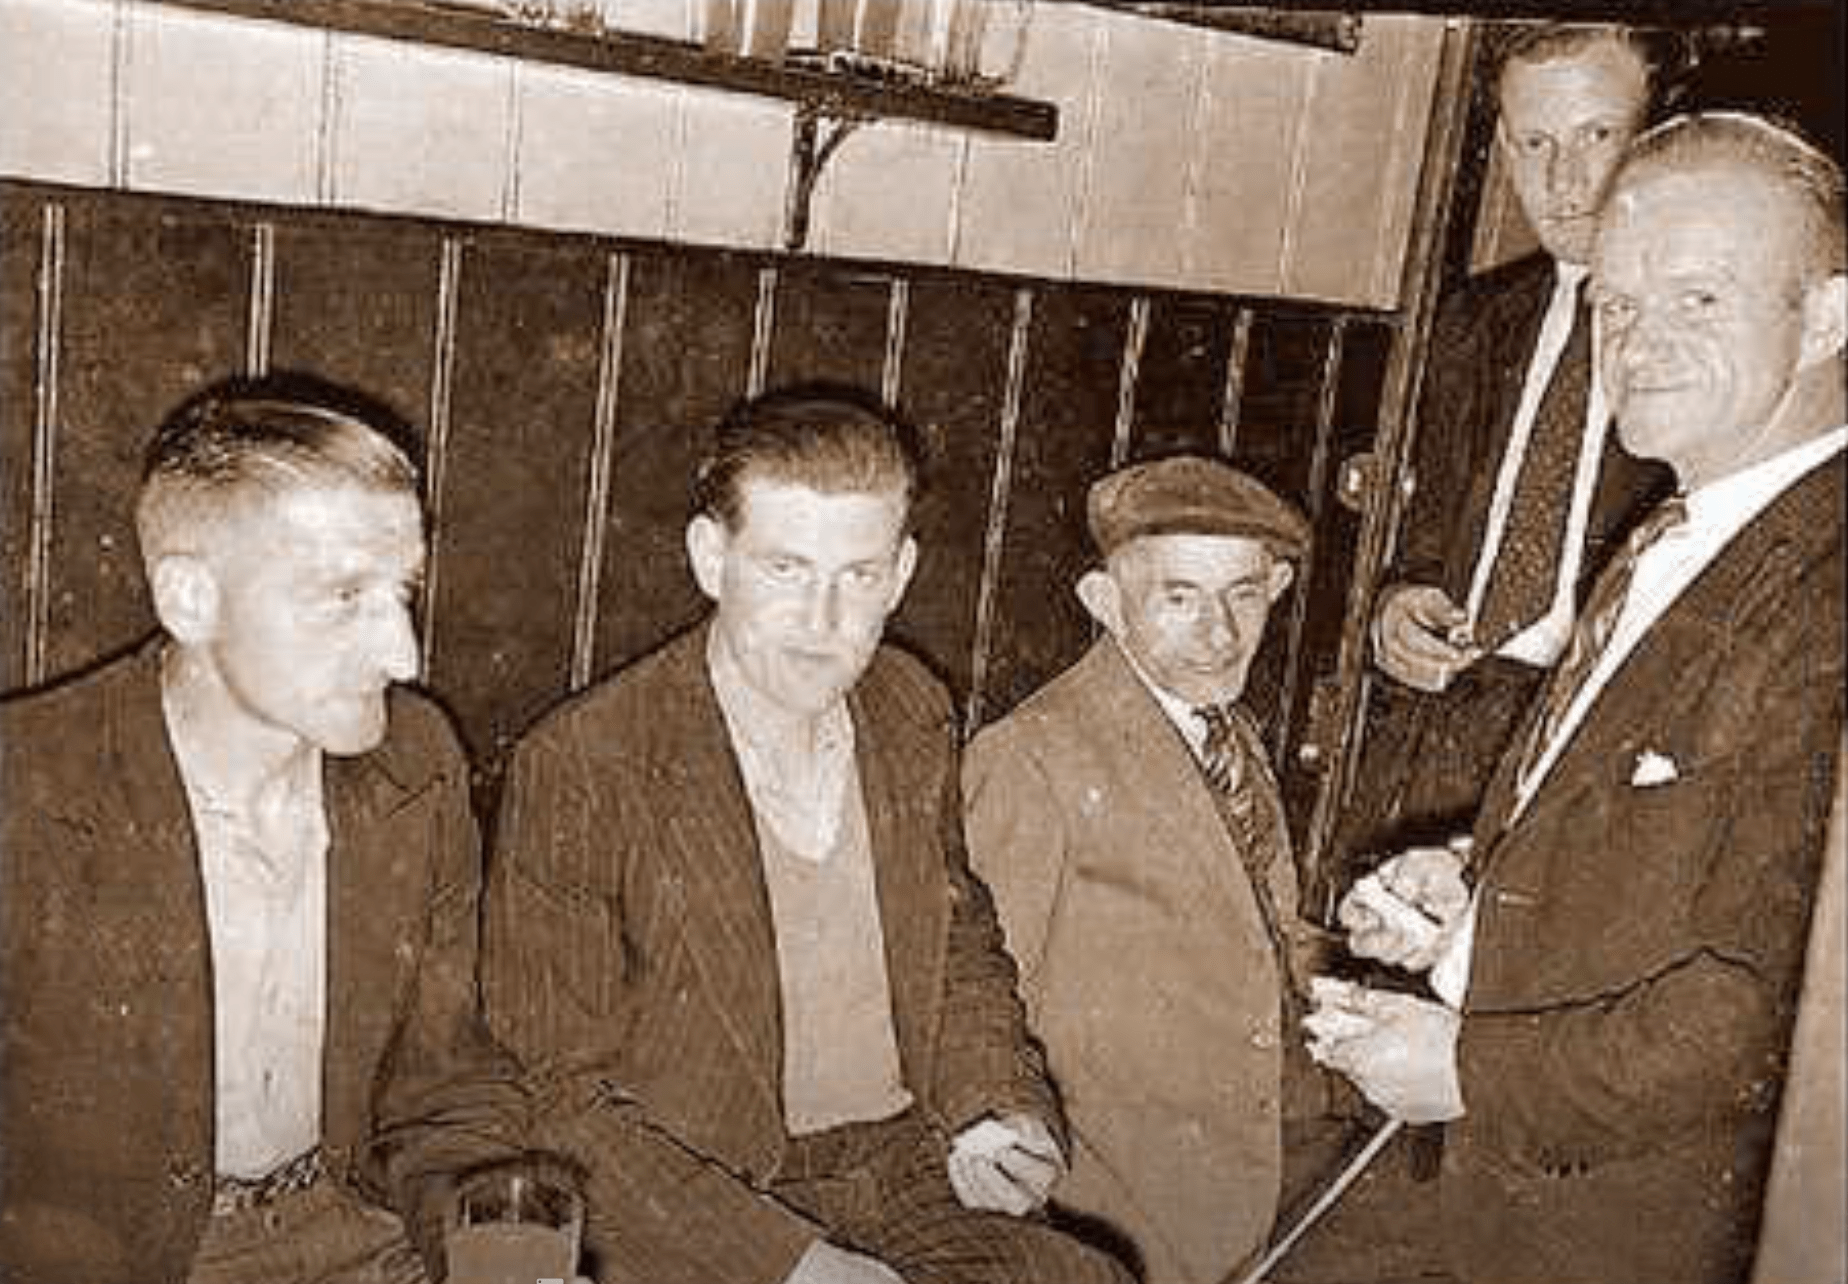 Ram Inn, Wotton-Under-Edge - Regulars from the 1960's